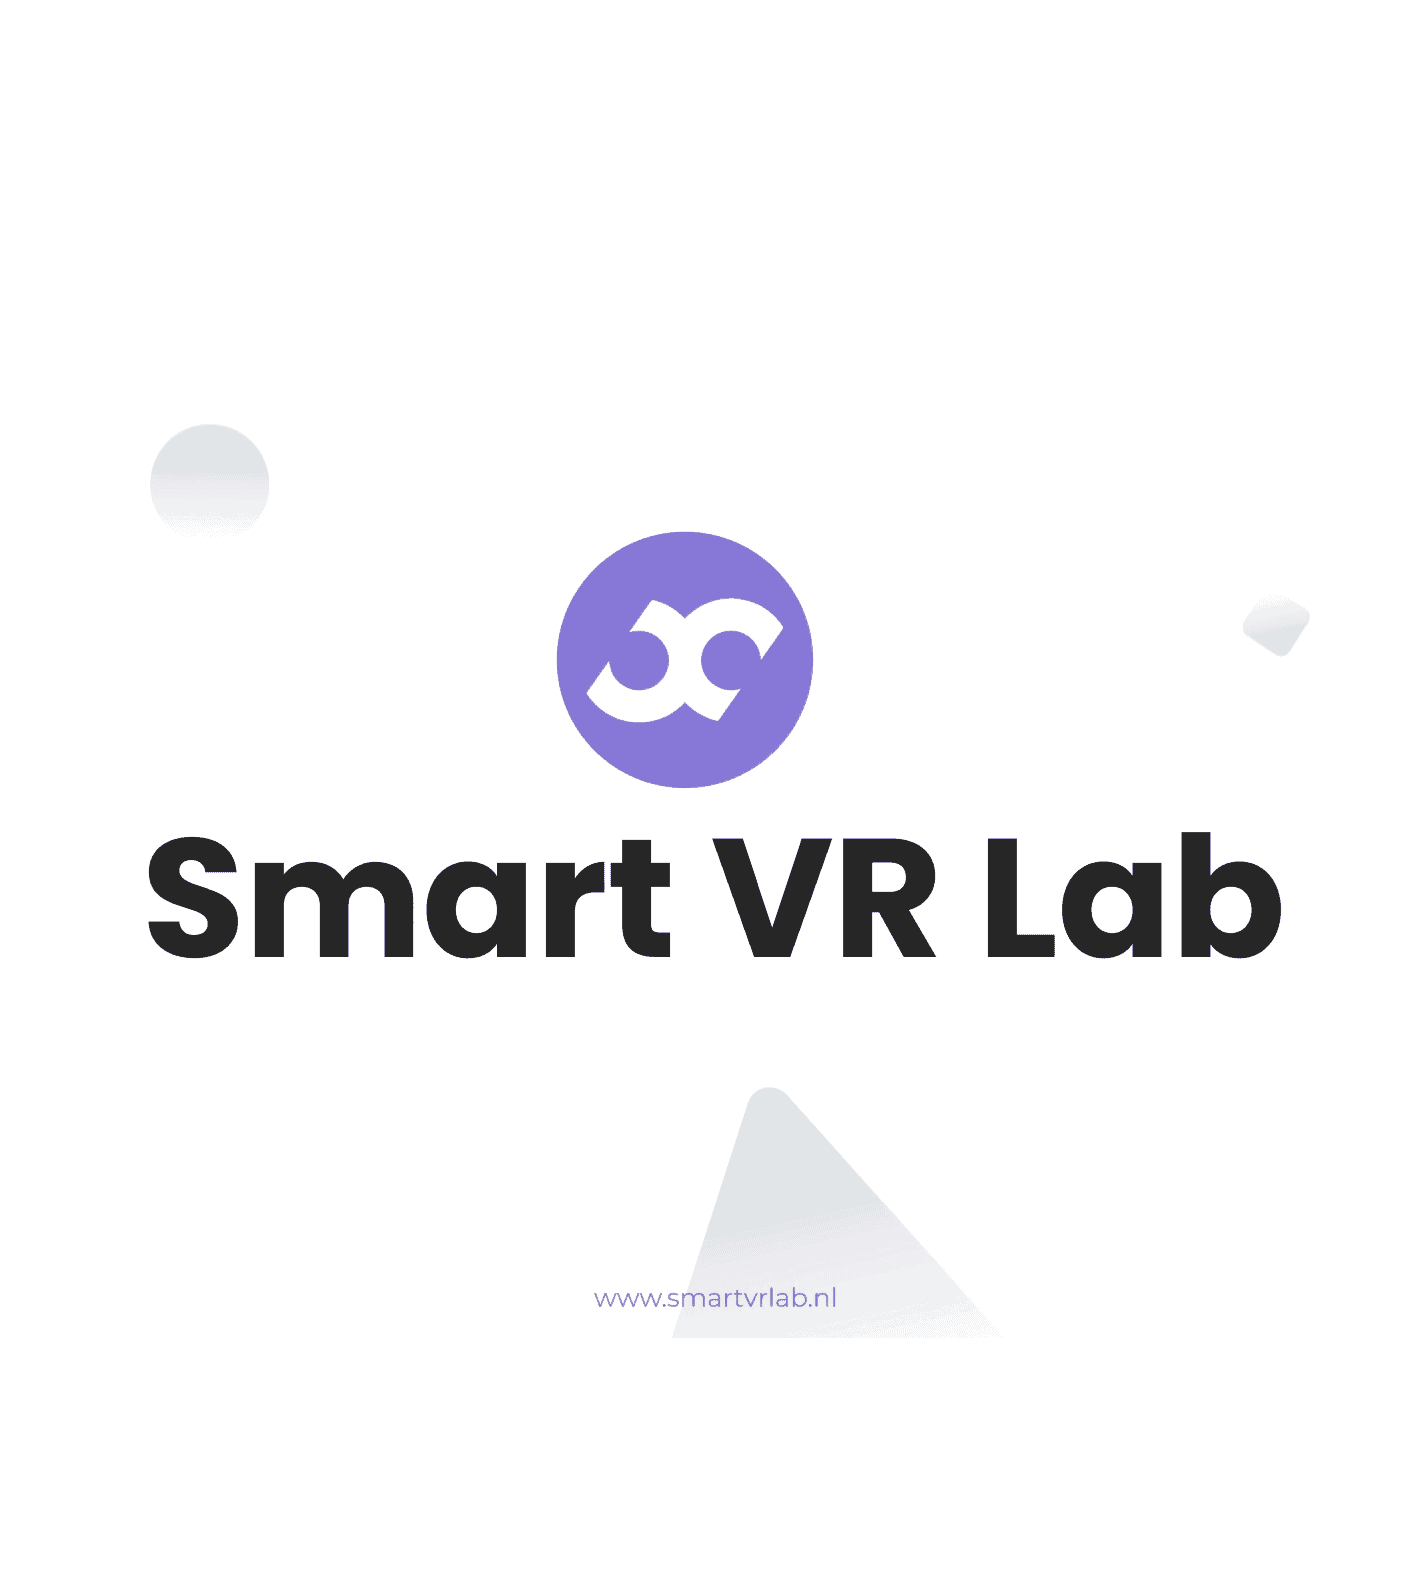 Smart VR Lab